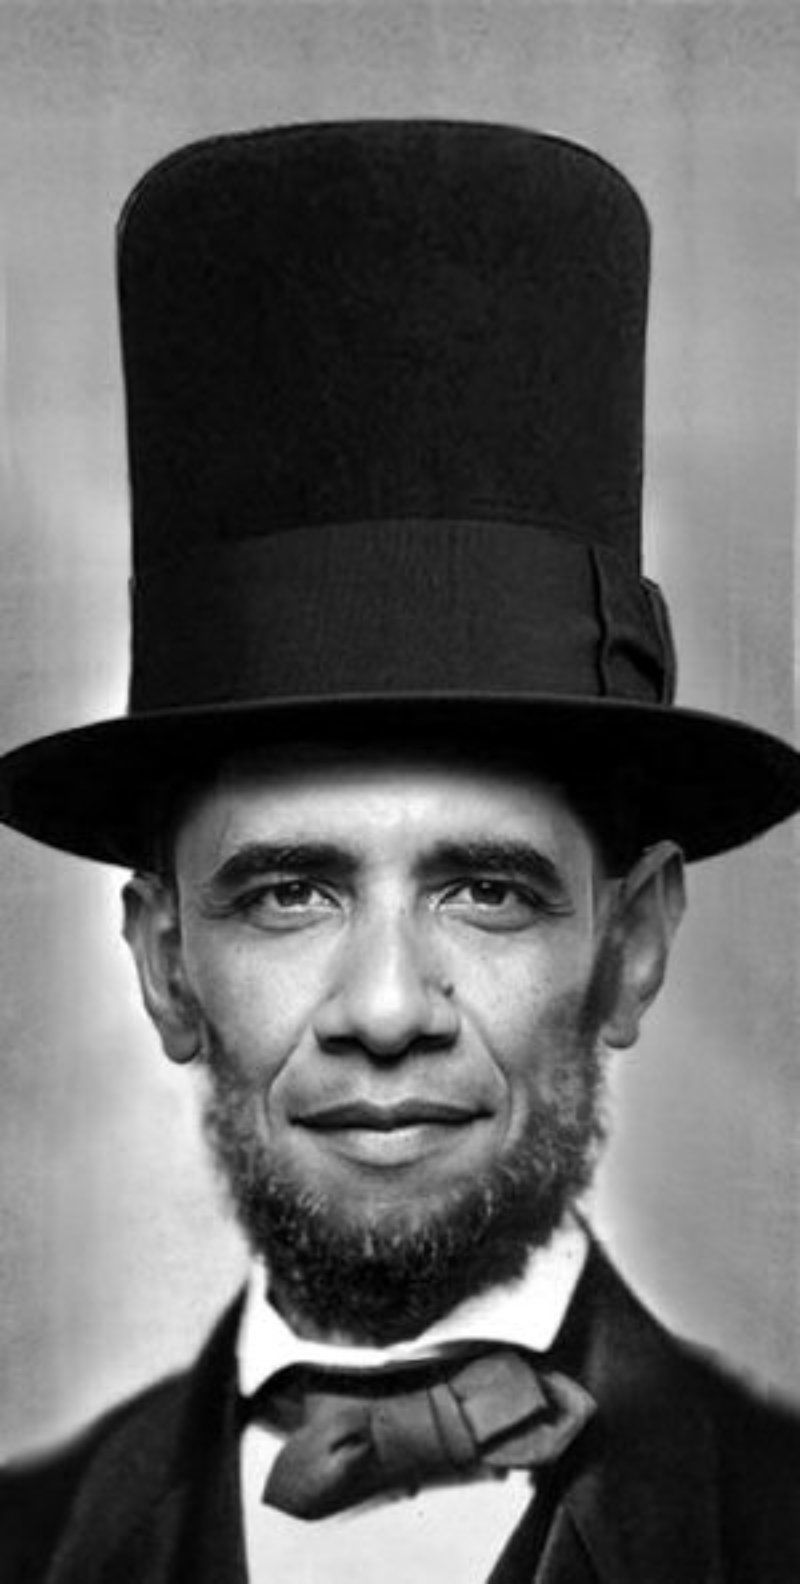 Obama-Lincoln mashup by the Black Agenda Report